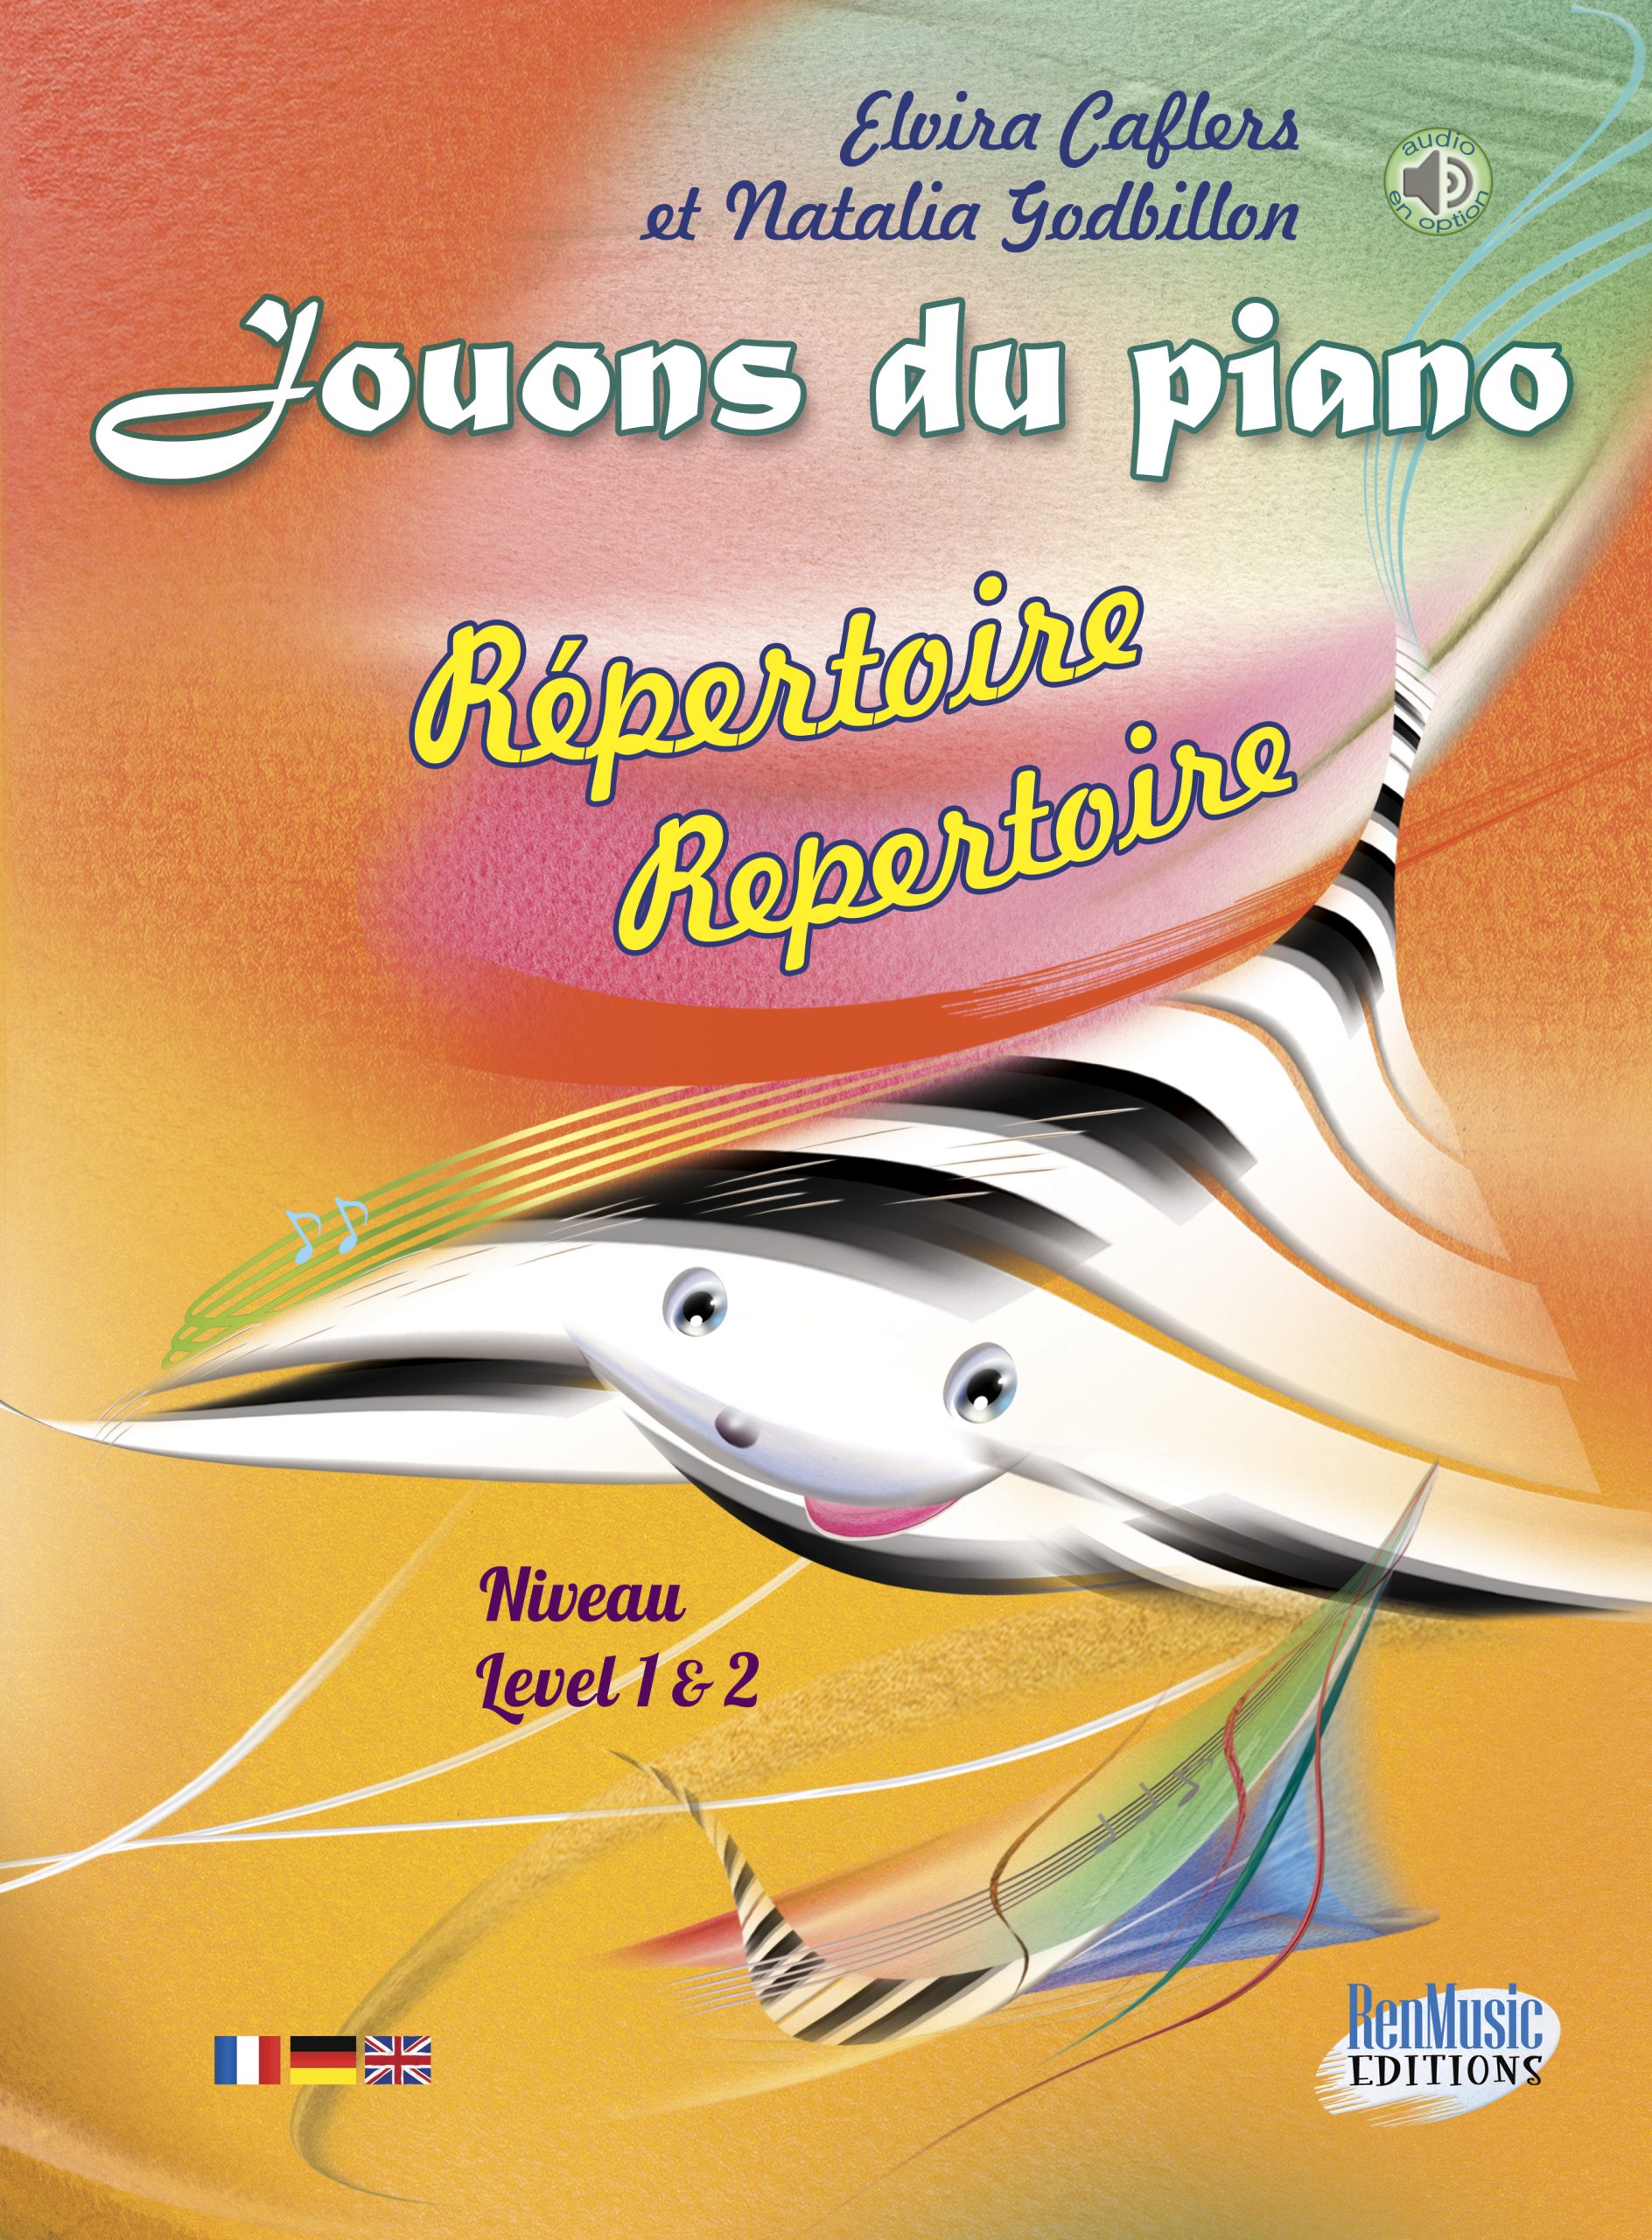 Jouons du piano Rpertoire (CAFLERS ELVIRA / GODBILLON NATALIA)